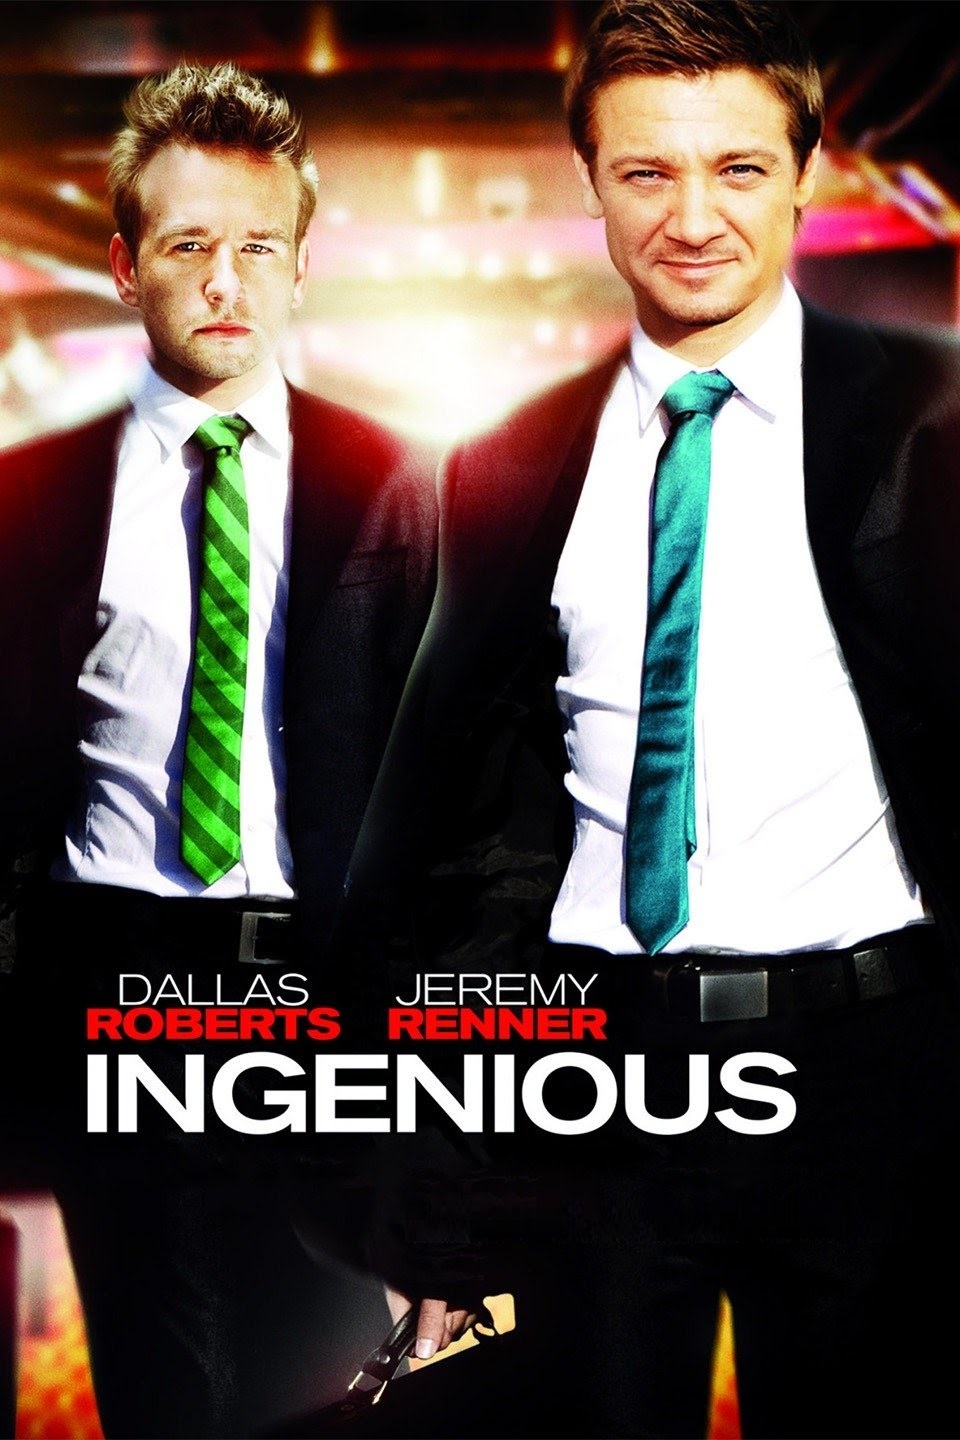 Ingenious [HD] (2009)